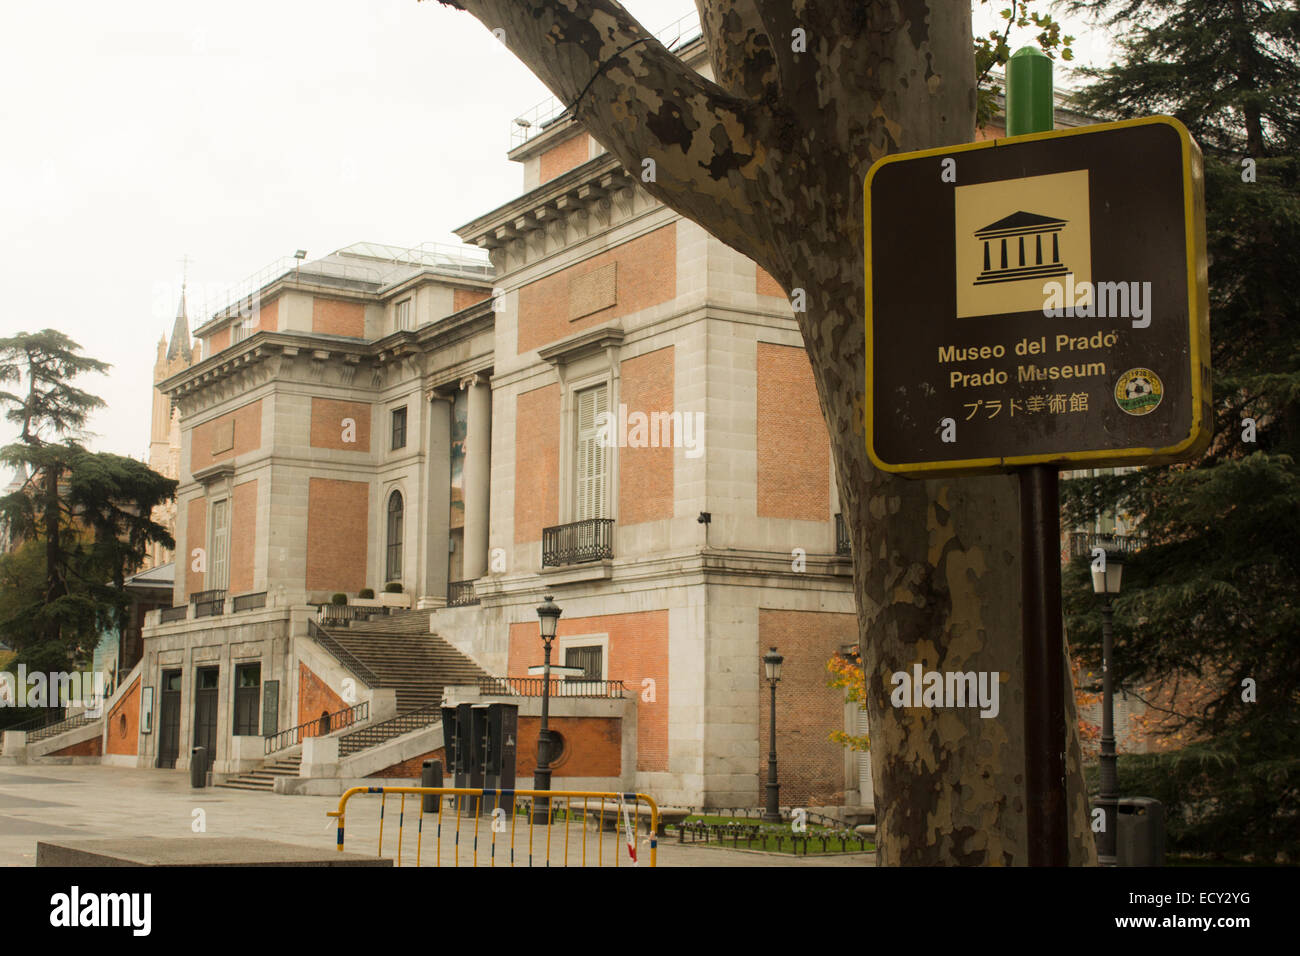 Museo del Prado sign, Madrid Stock Photo